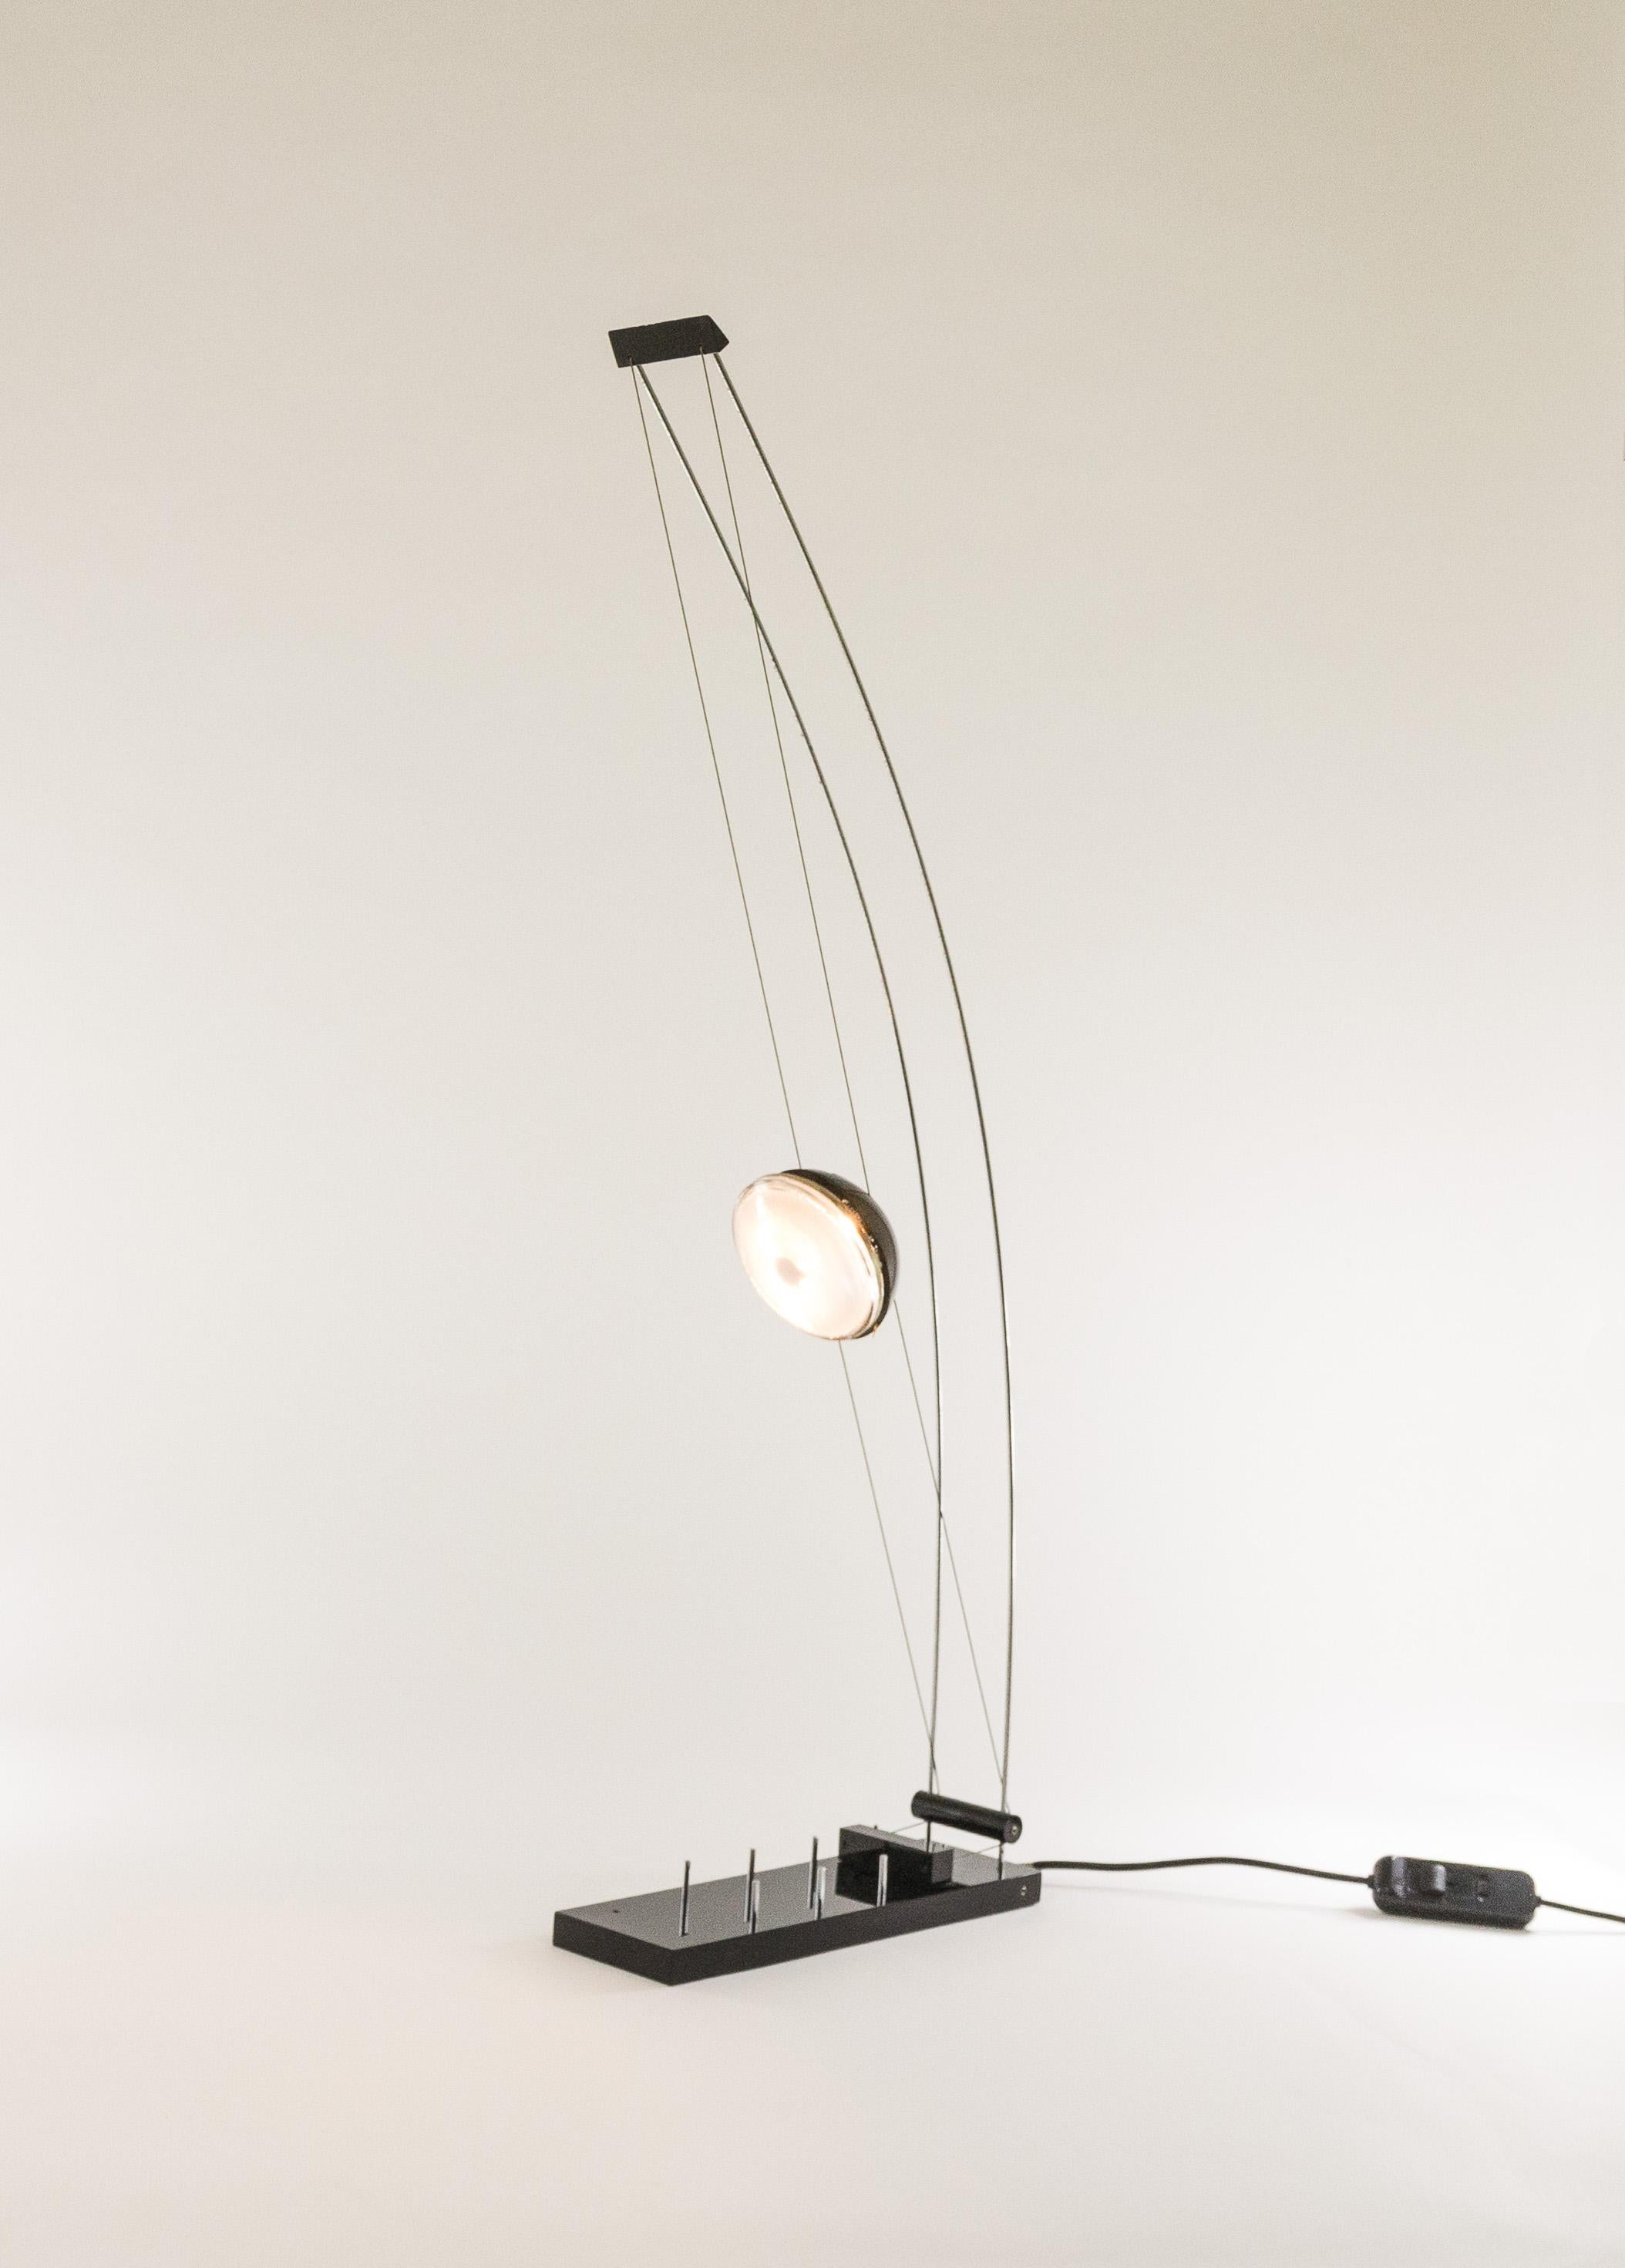 German Lighting Sculpture 'Arco-nero' Designed by Axel Meise for AML Licht + Design